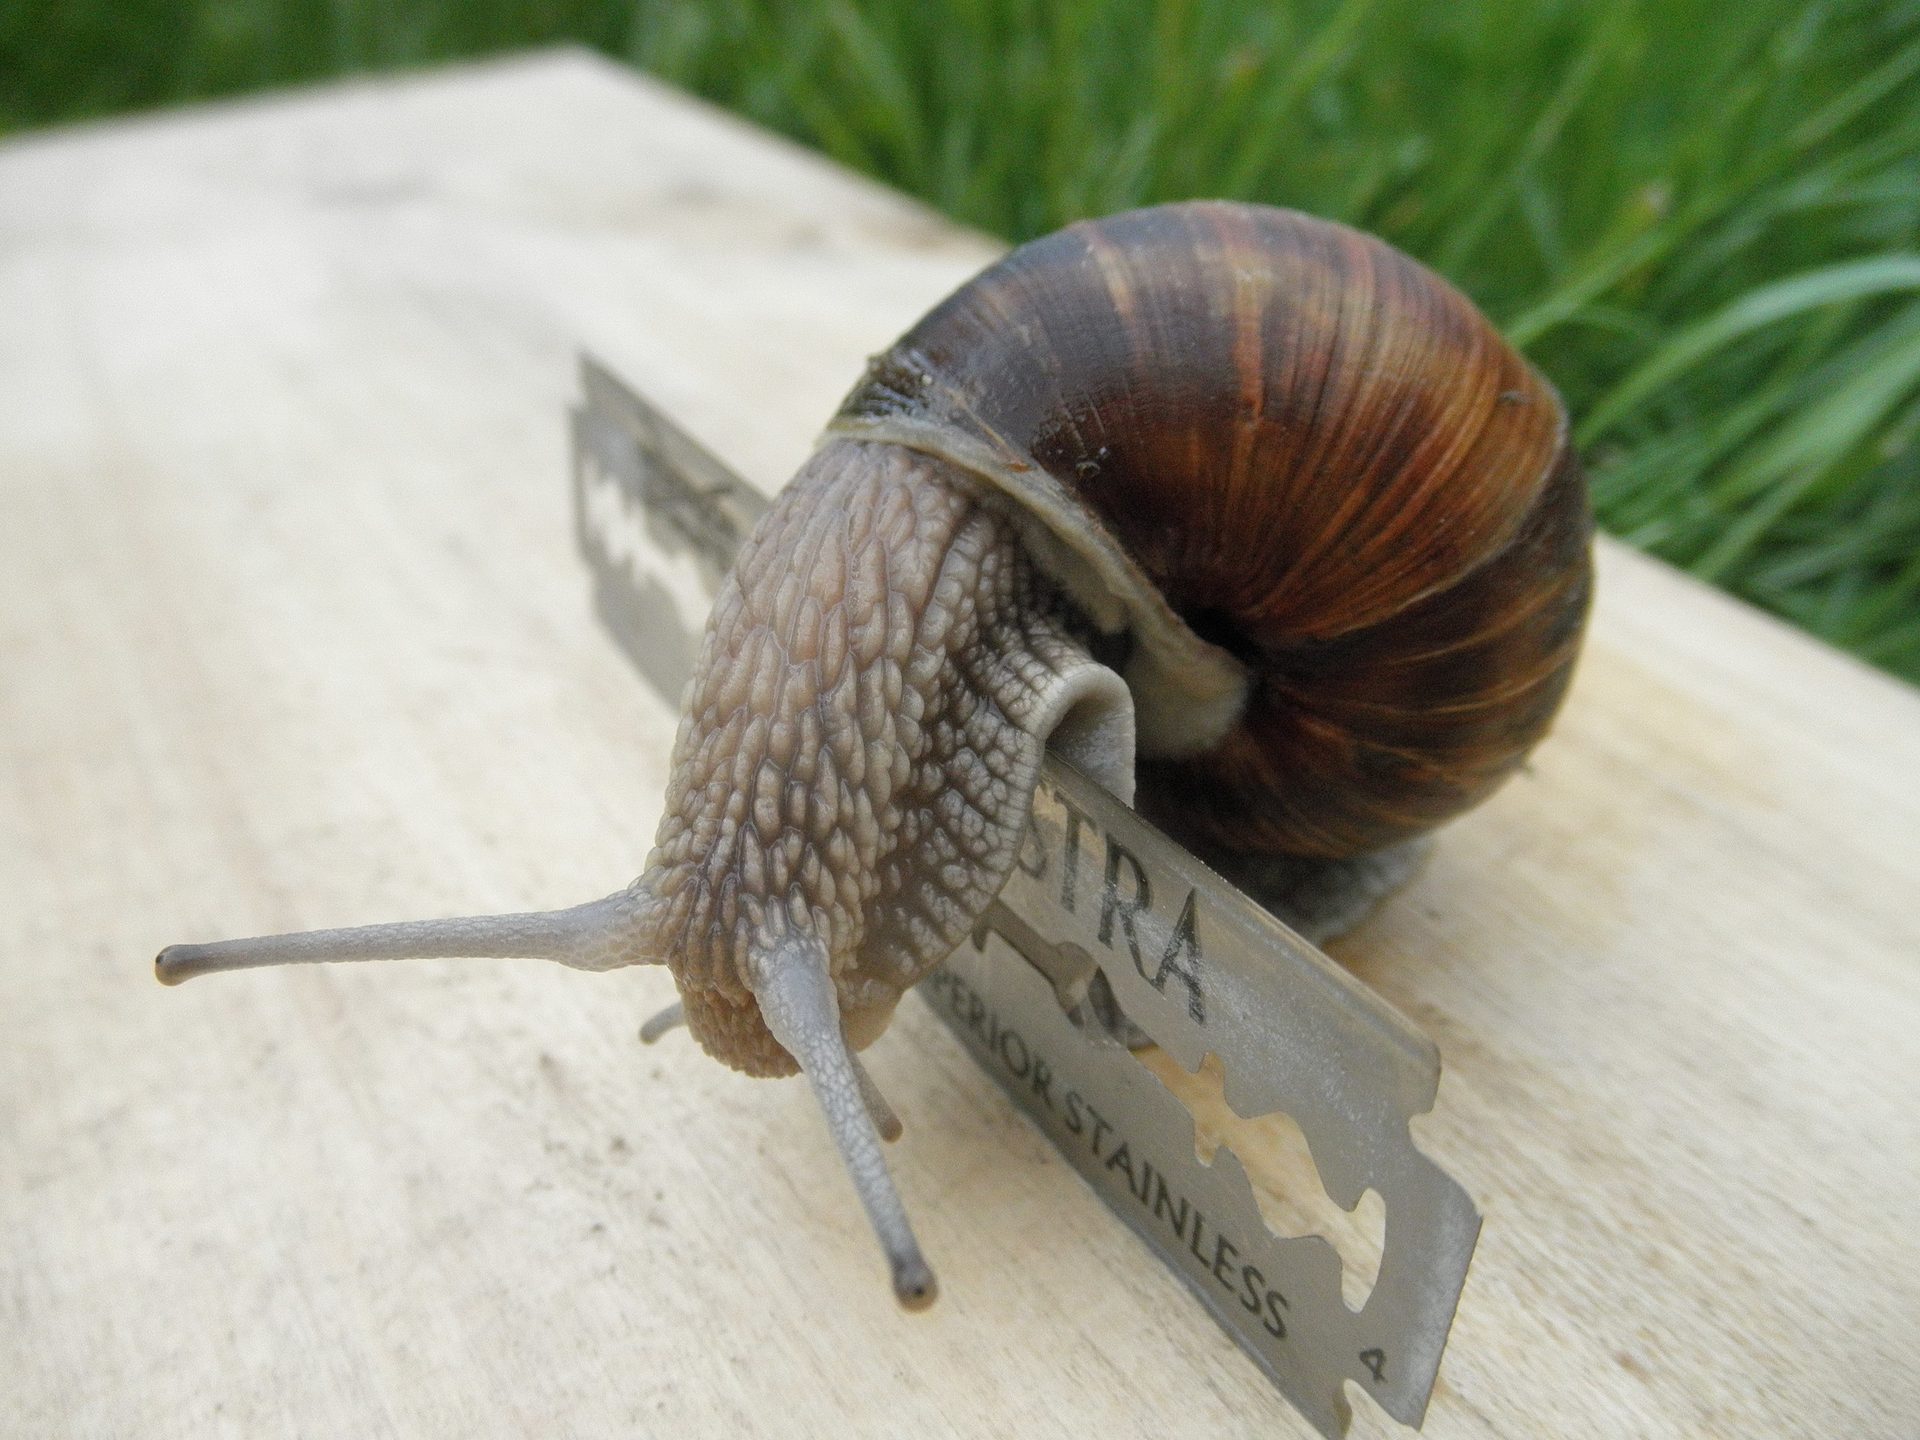 Snails and slugs, Terrestrial animal, Eye, Snail, Wood, Shell